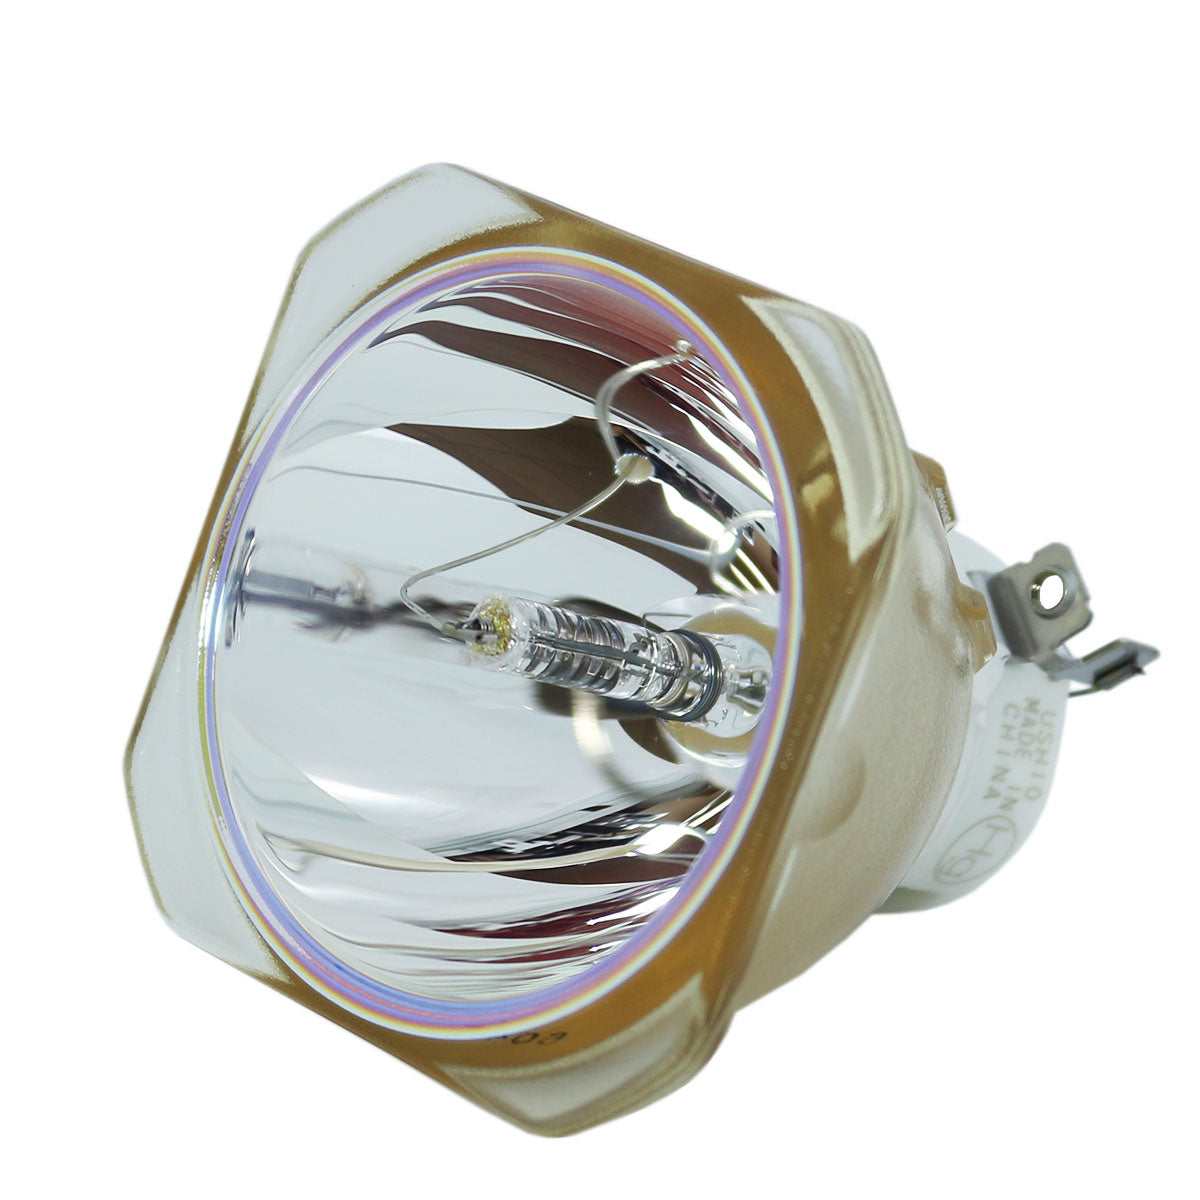 RICOH 308933 Ushio Projector Bare Lamp